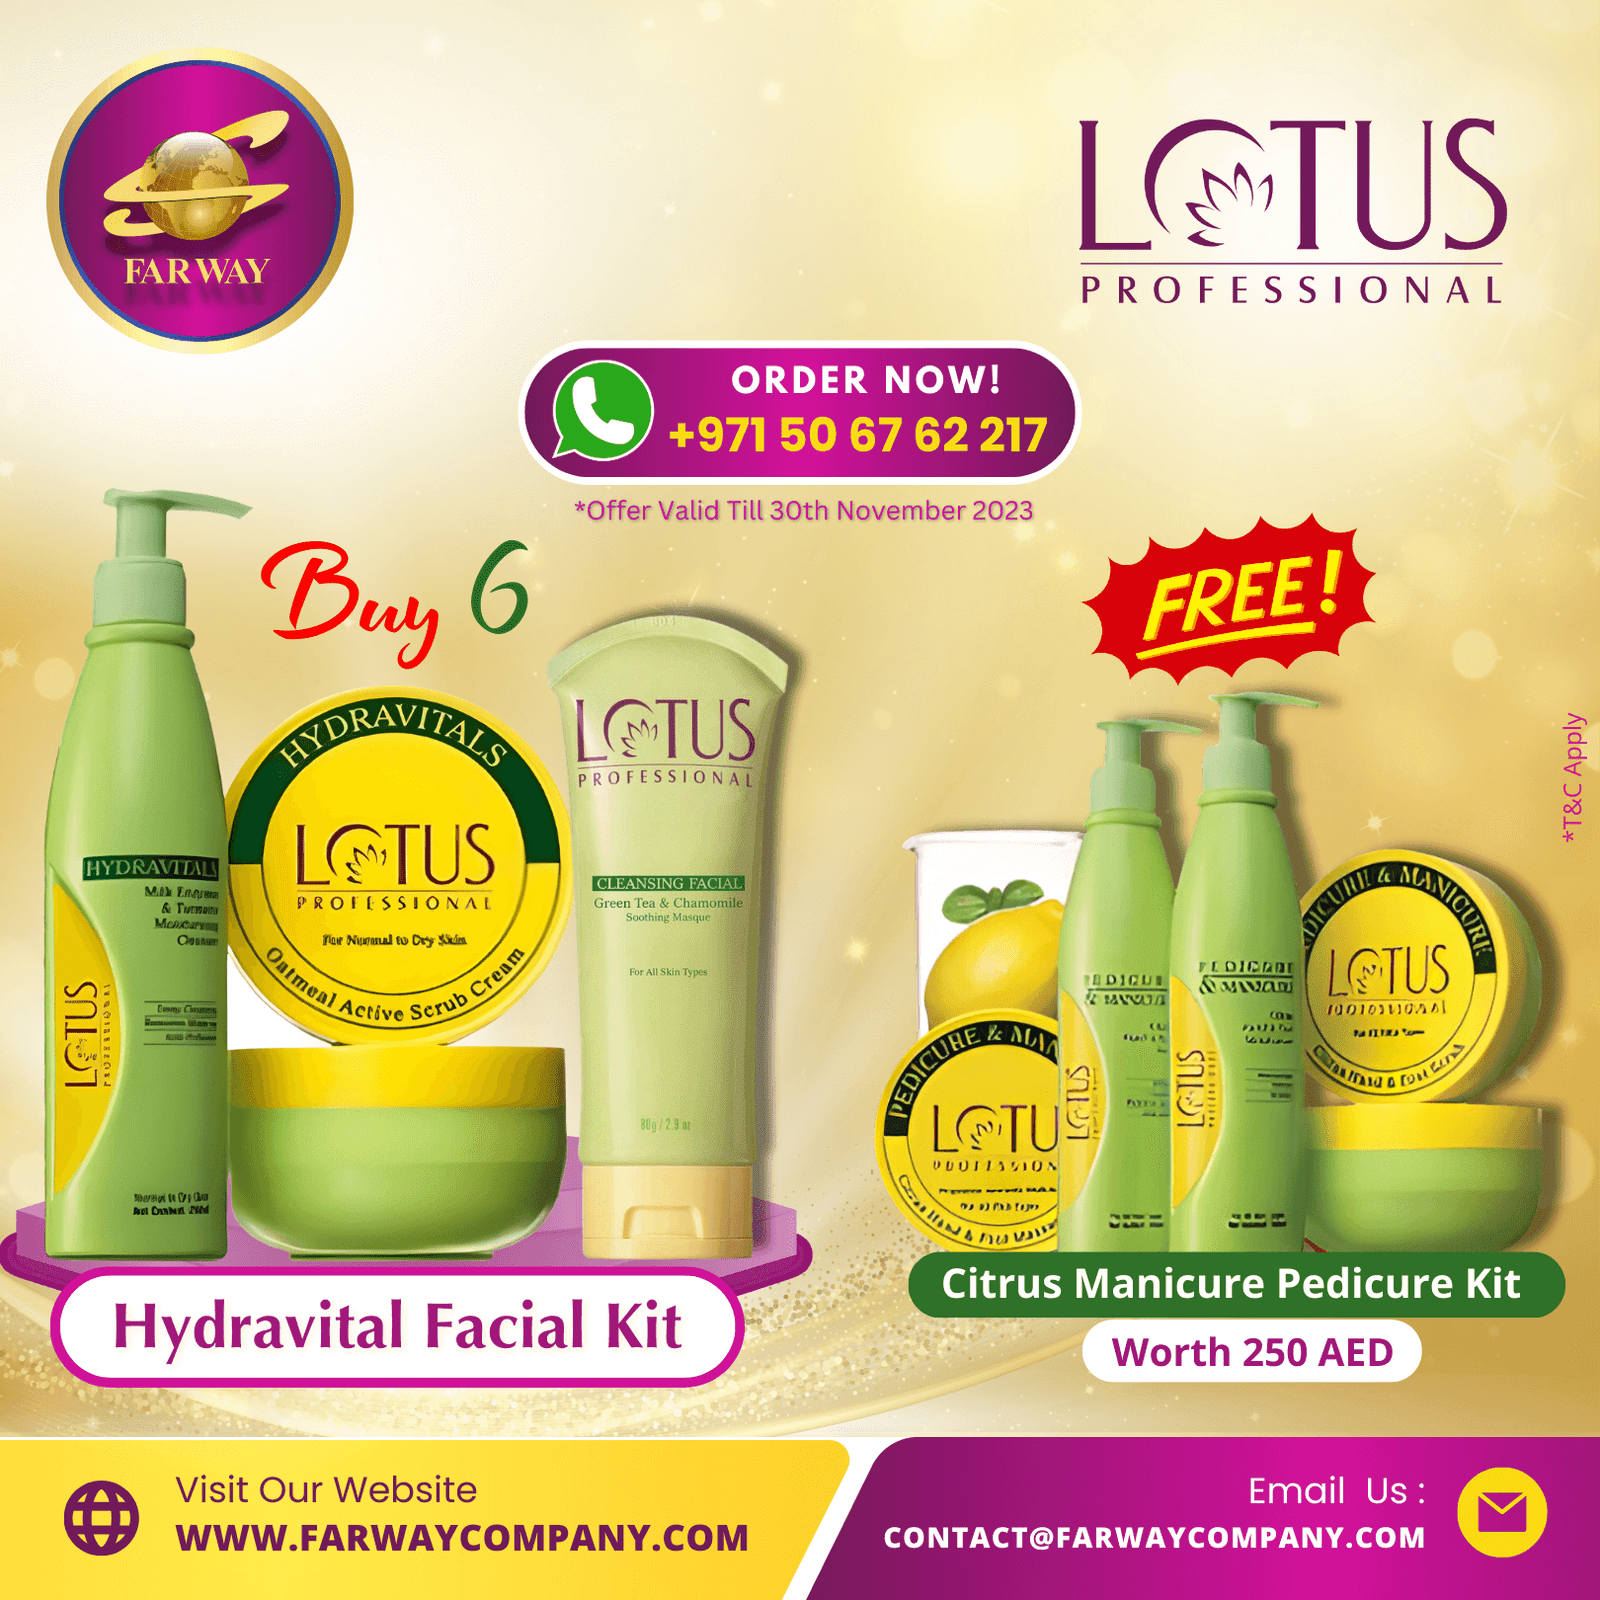 Lotus Professional Hydravital Facial Kit for Salon Distributor in Dubai, UAE, Middle East Far Way